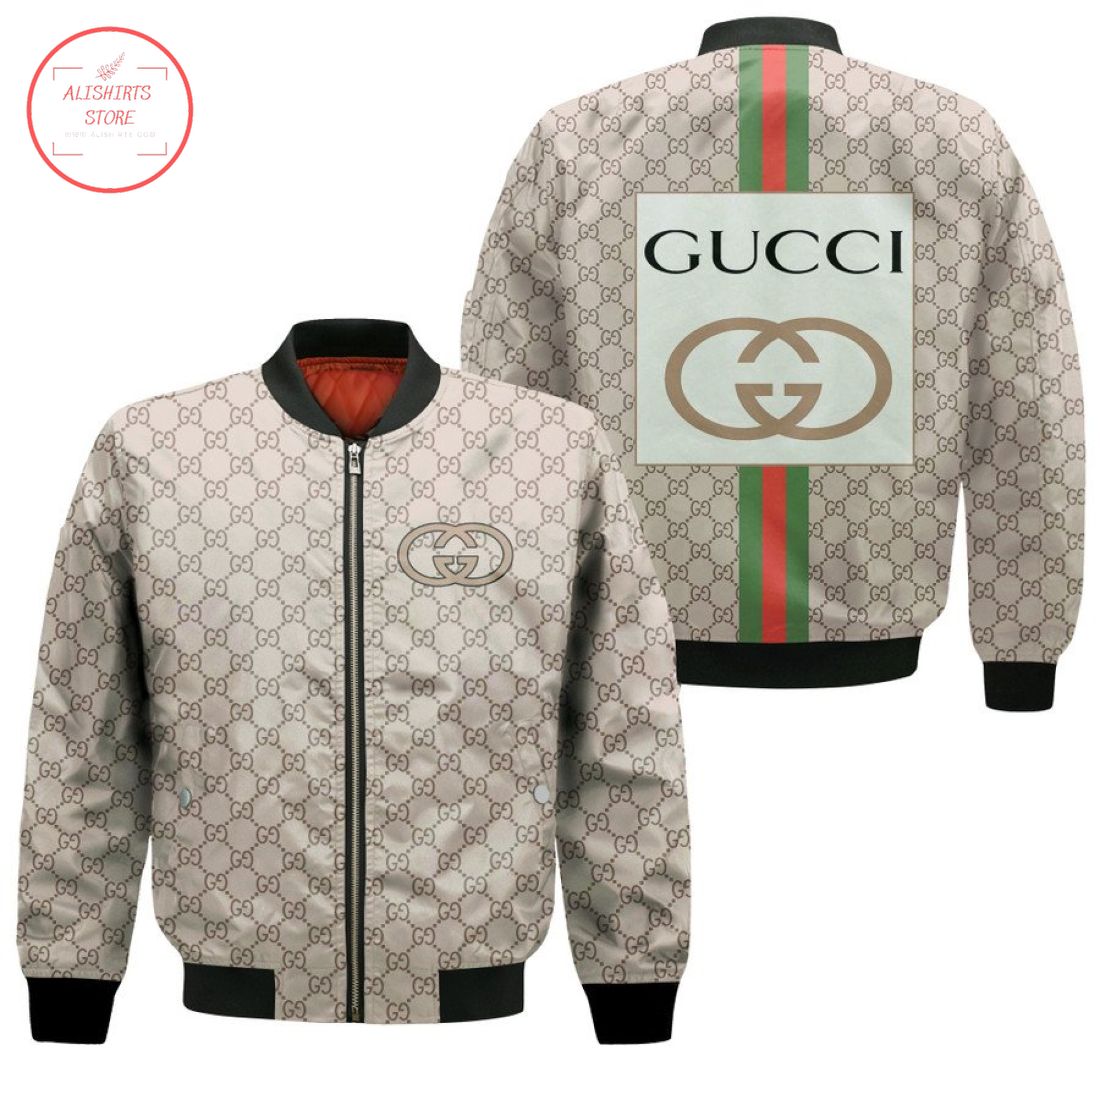 Gucci Italian Luxury Brand Bomber Jacket